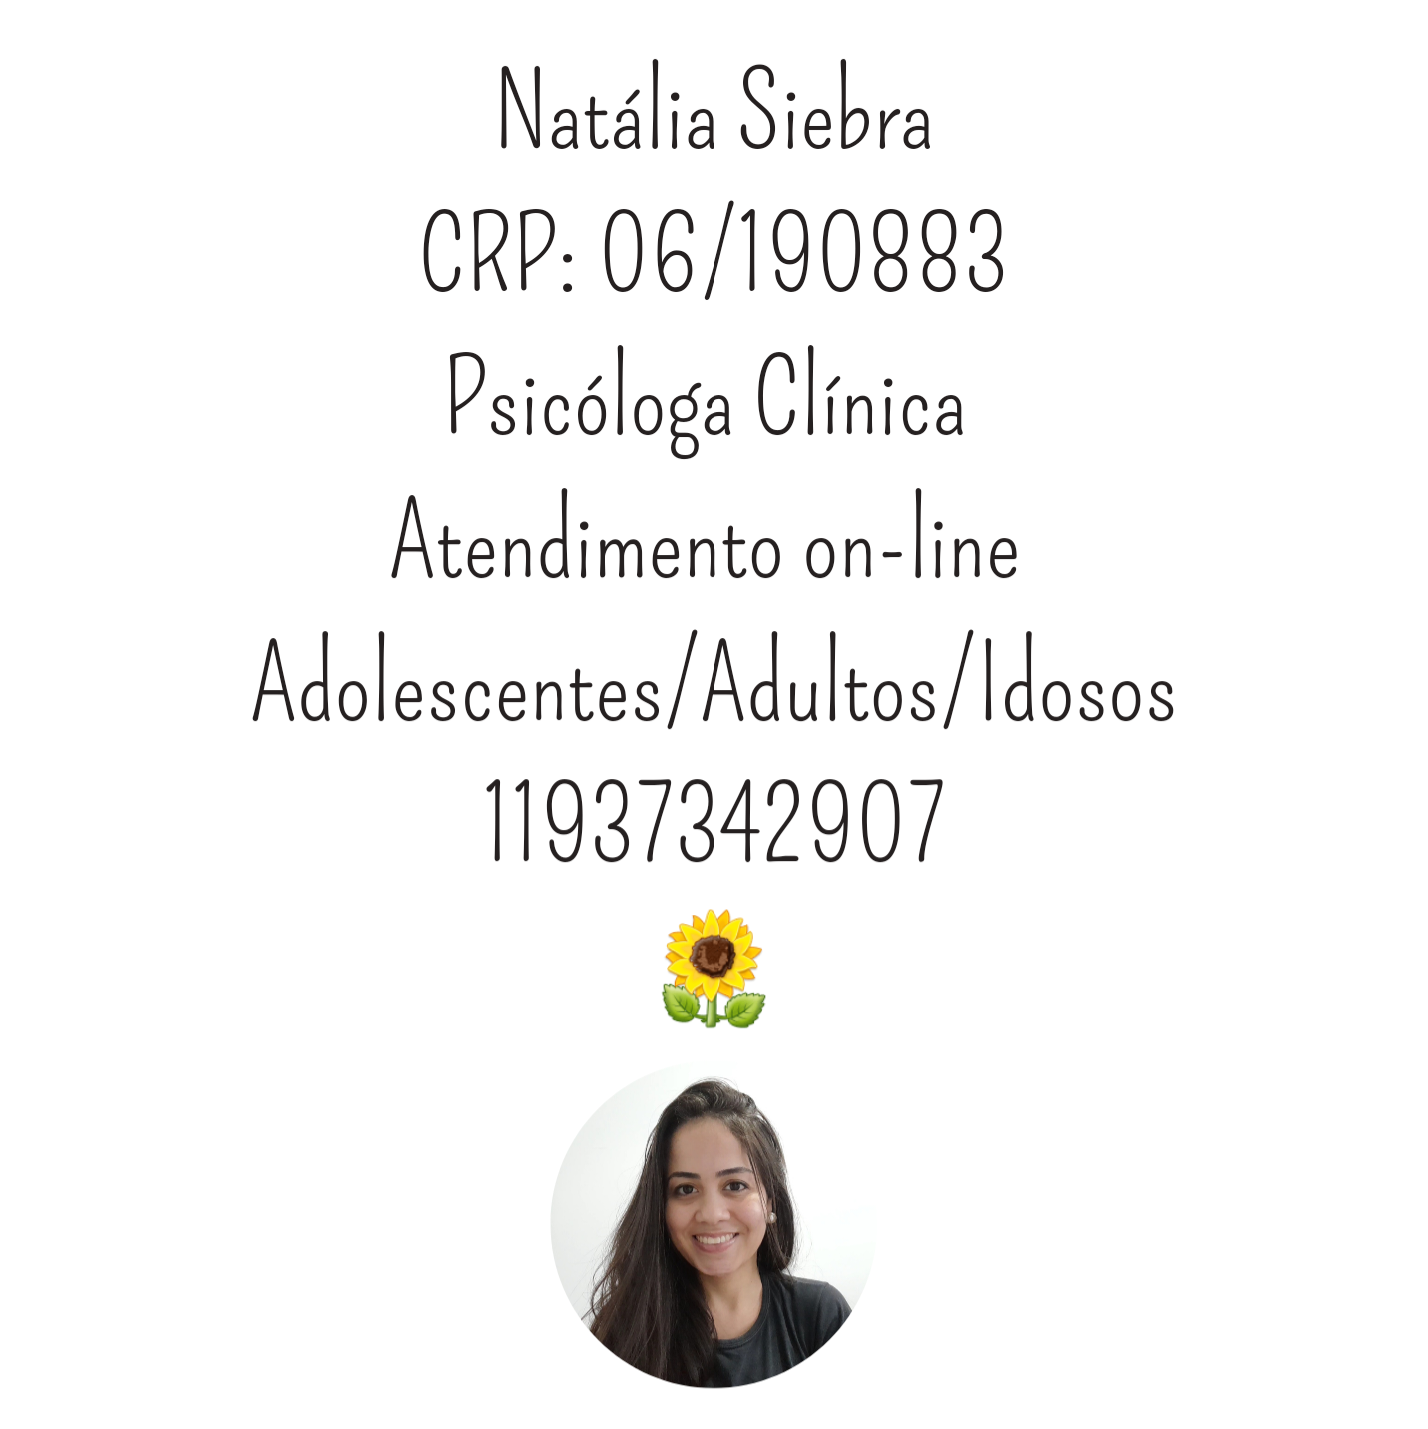 Natalia Siebra
CRP: 06/190883
Psicéloga Clinica
Atendimento on-line
Adolescentes/Adultos/ldosos
11937342907

@

 

&amp;